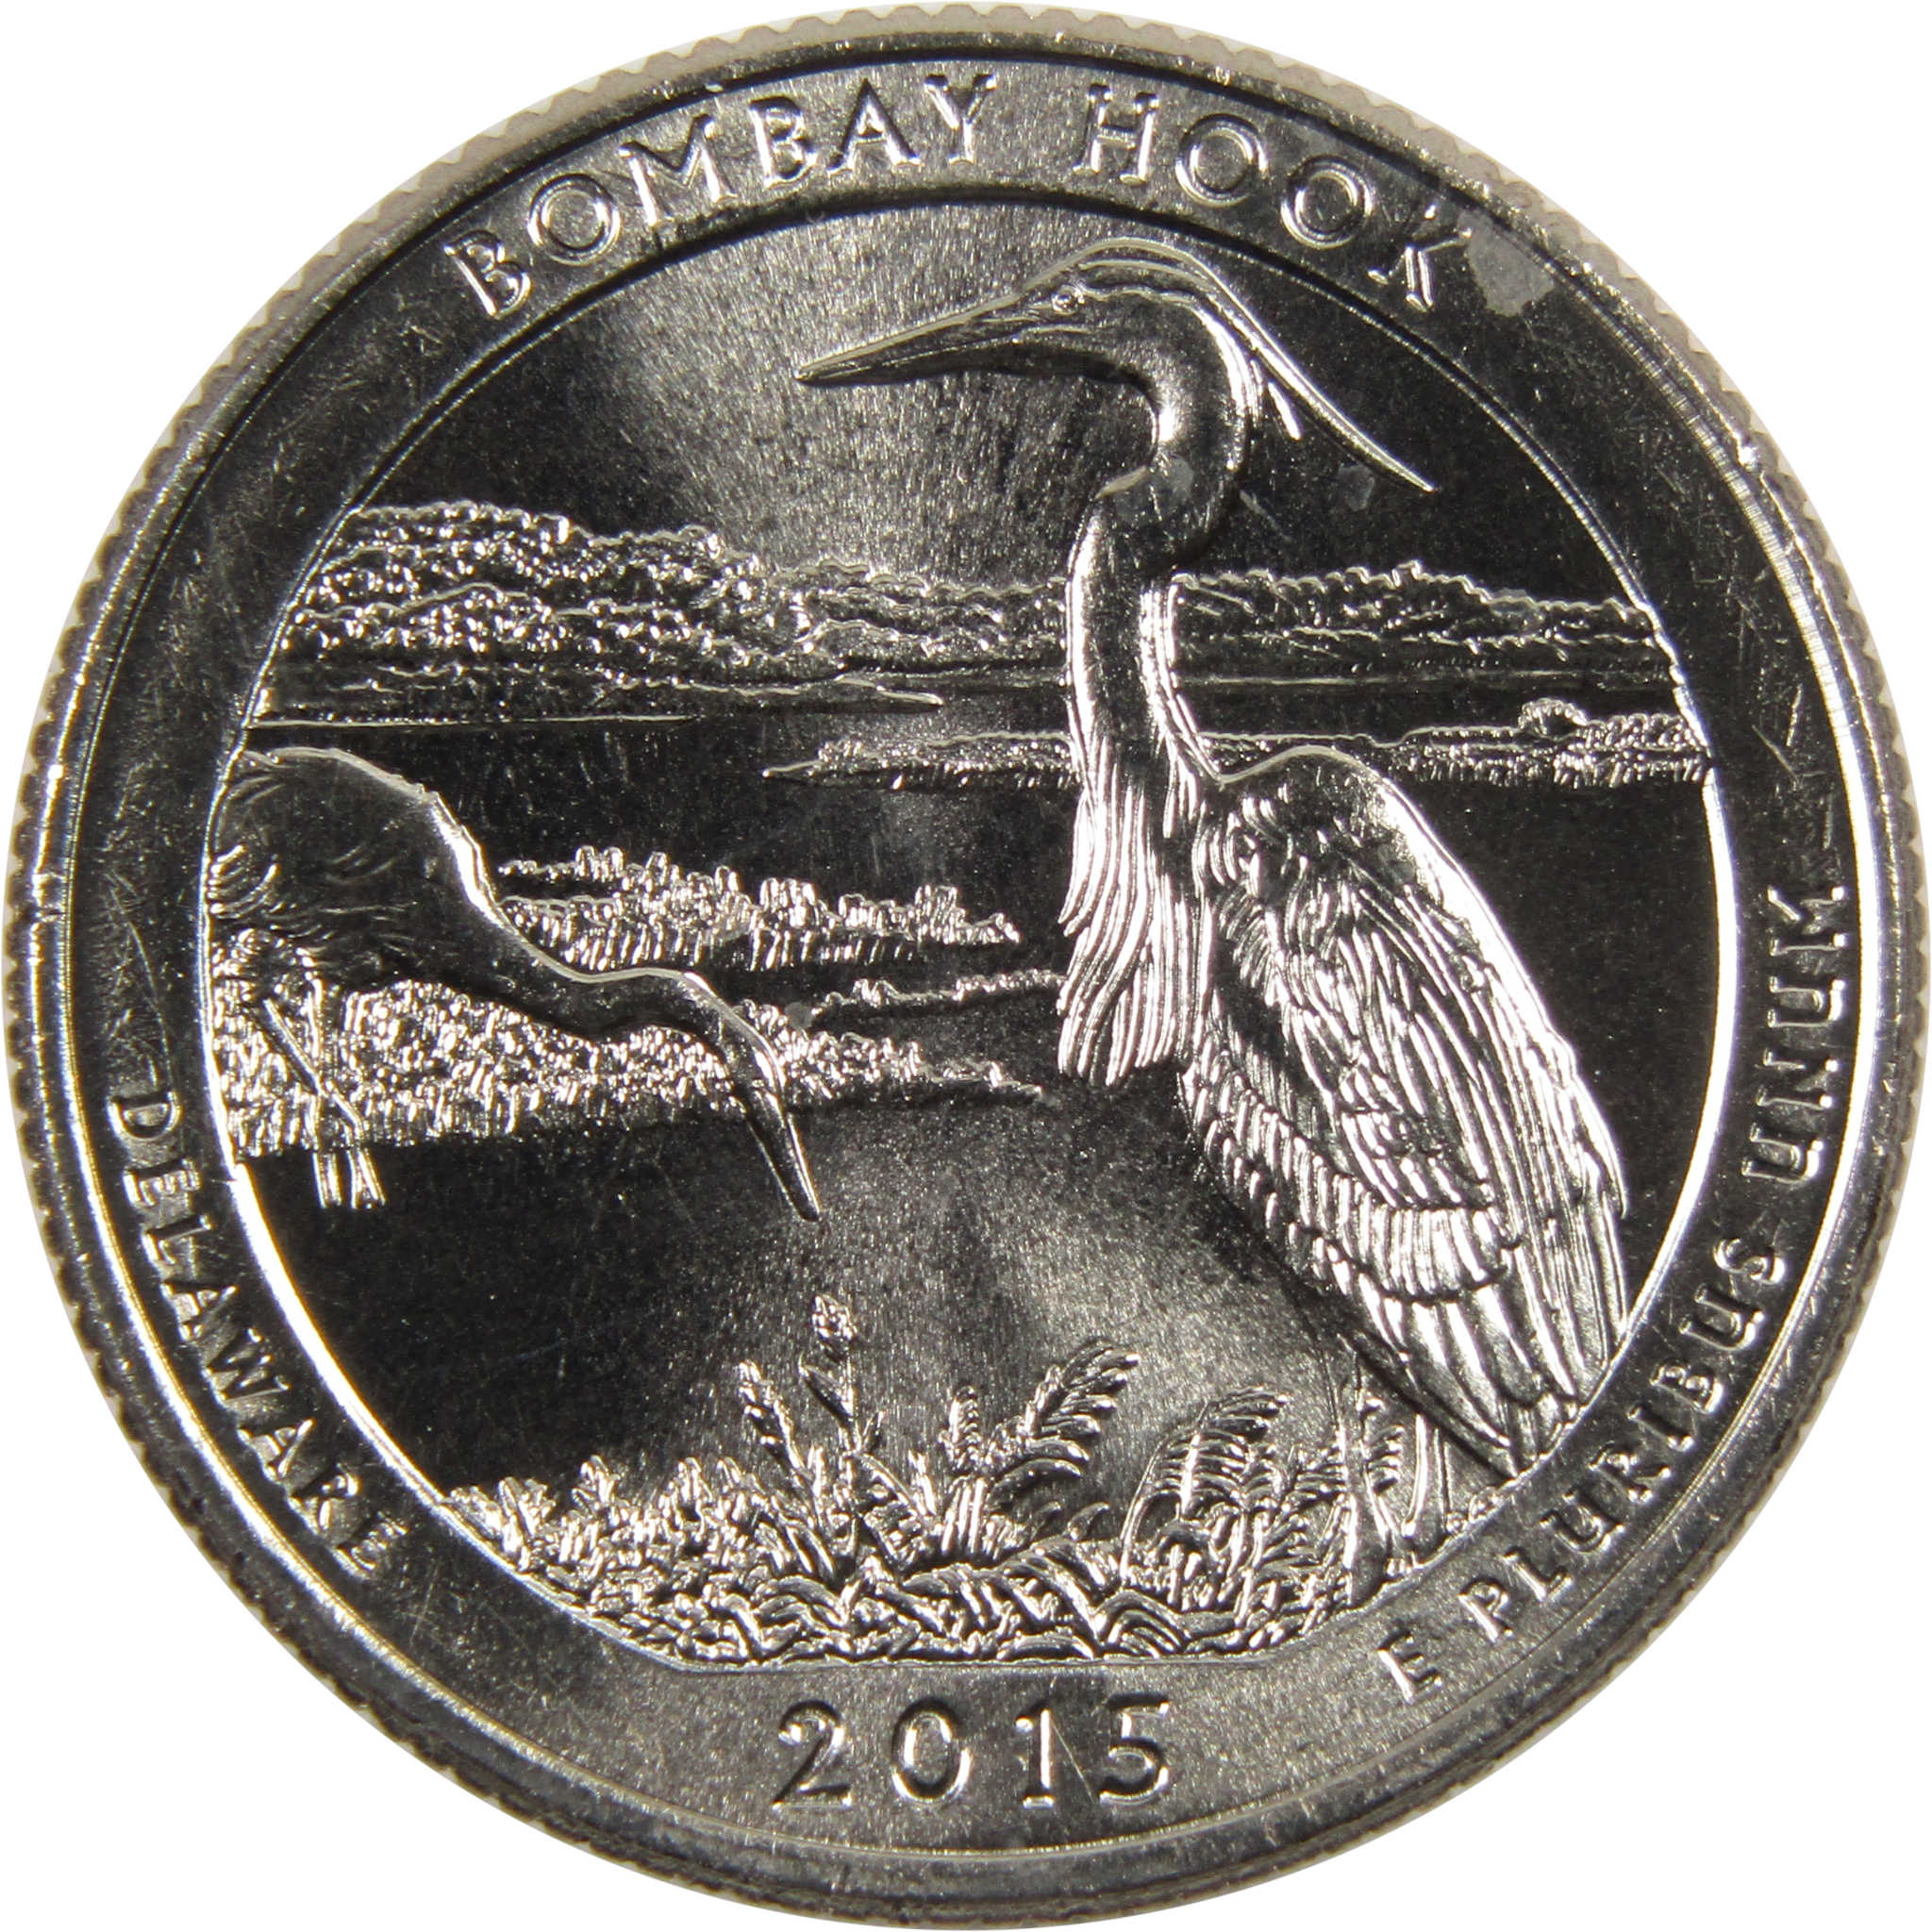 2015 D Bombay Hook National Park Quarter BU Uncirculated Clad 25c Coin